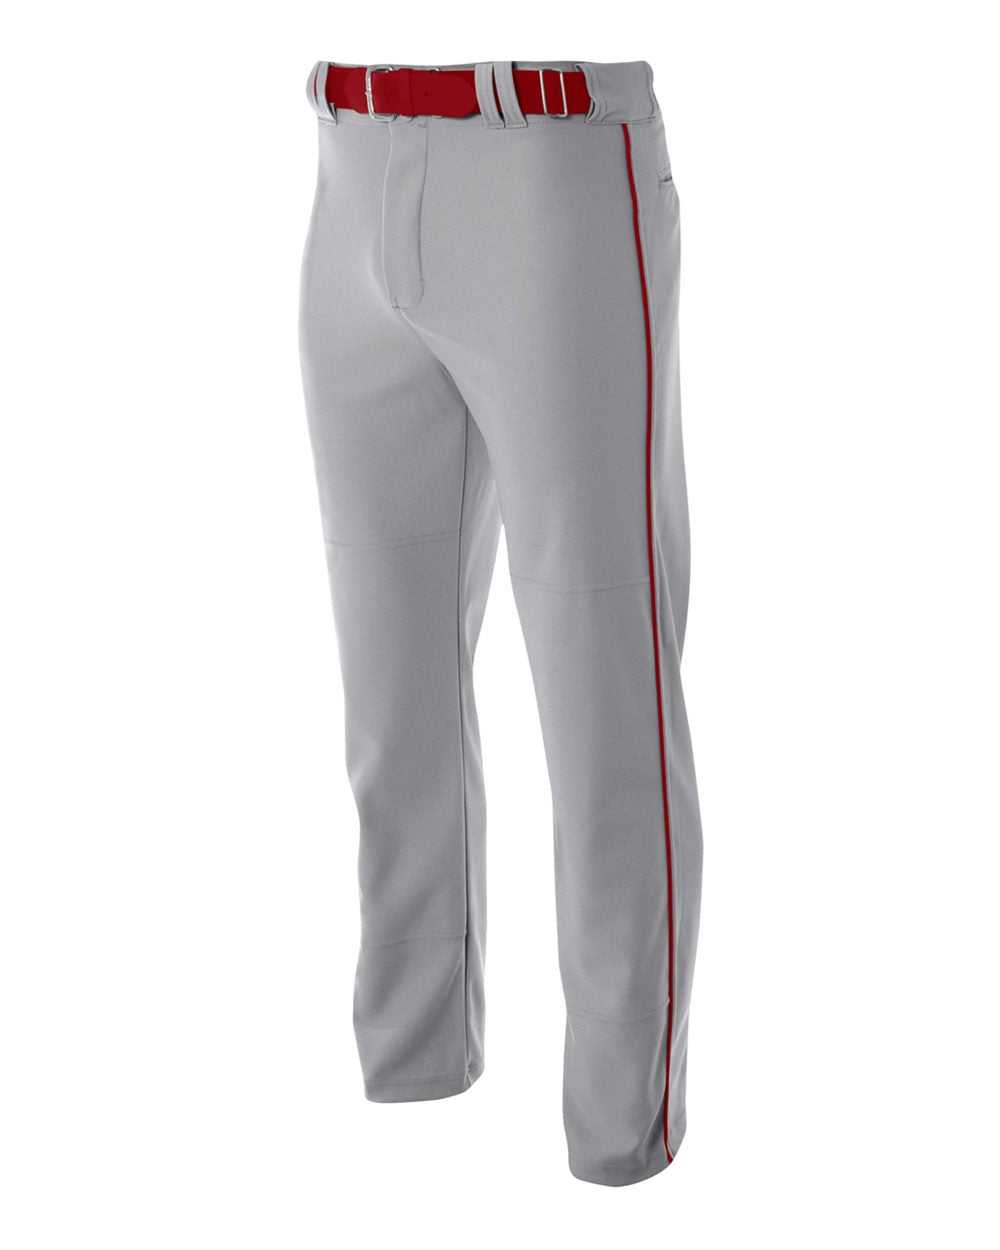 A4 NB6162 Youth Pro Style Open Bottom Baggy Cut Baseball Pant - Gray Cardinal - HIT a Double